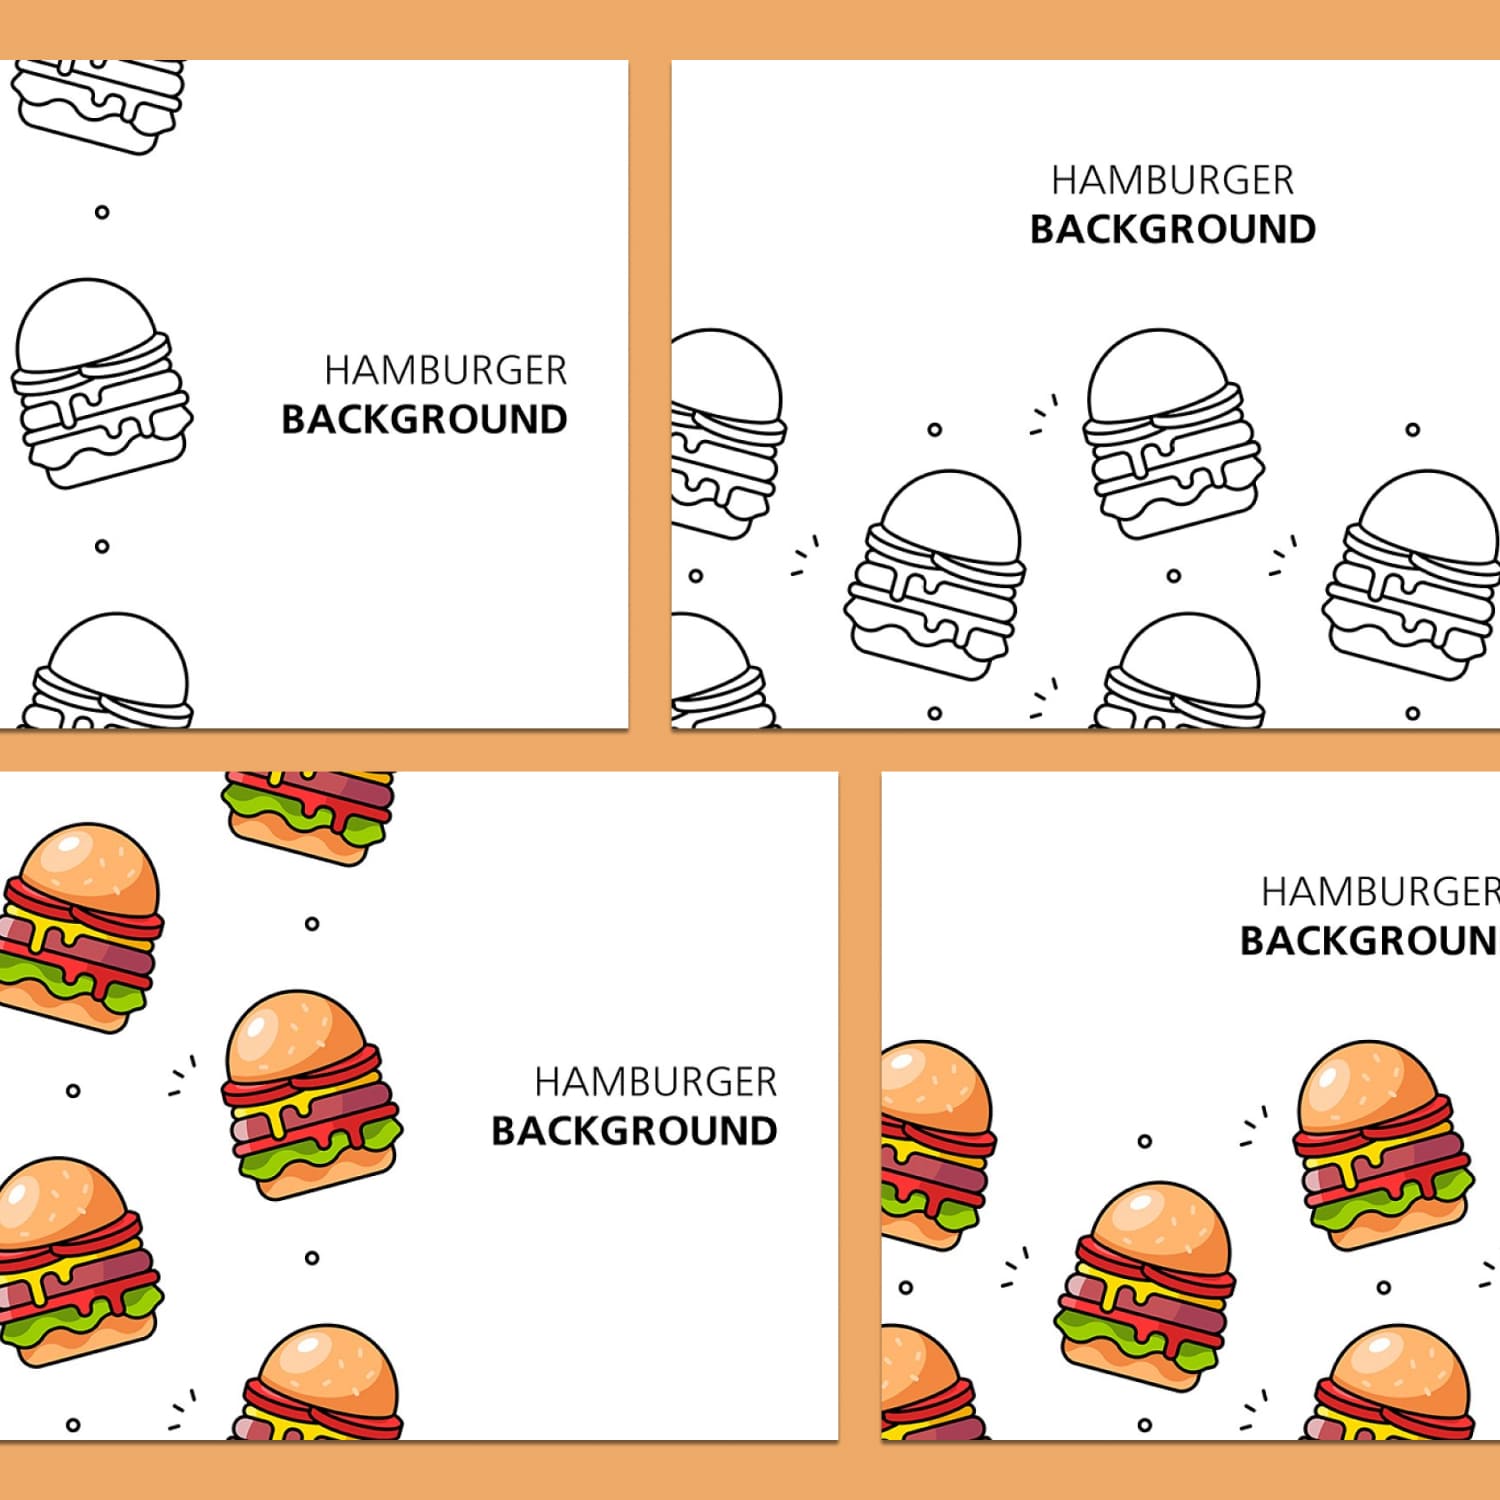 Hamburger background created by volyk.nataliia.